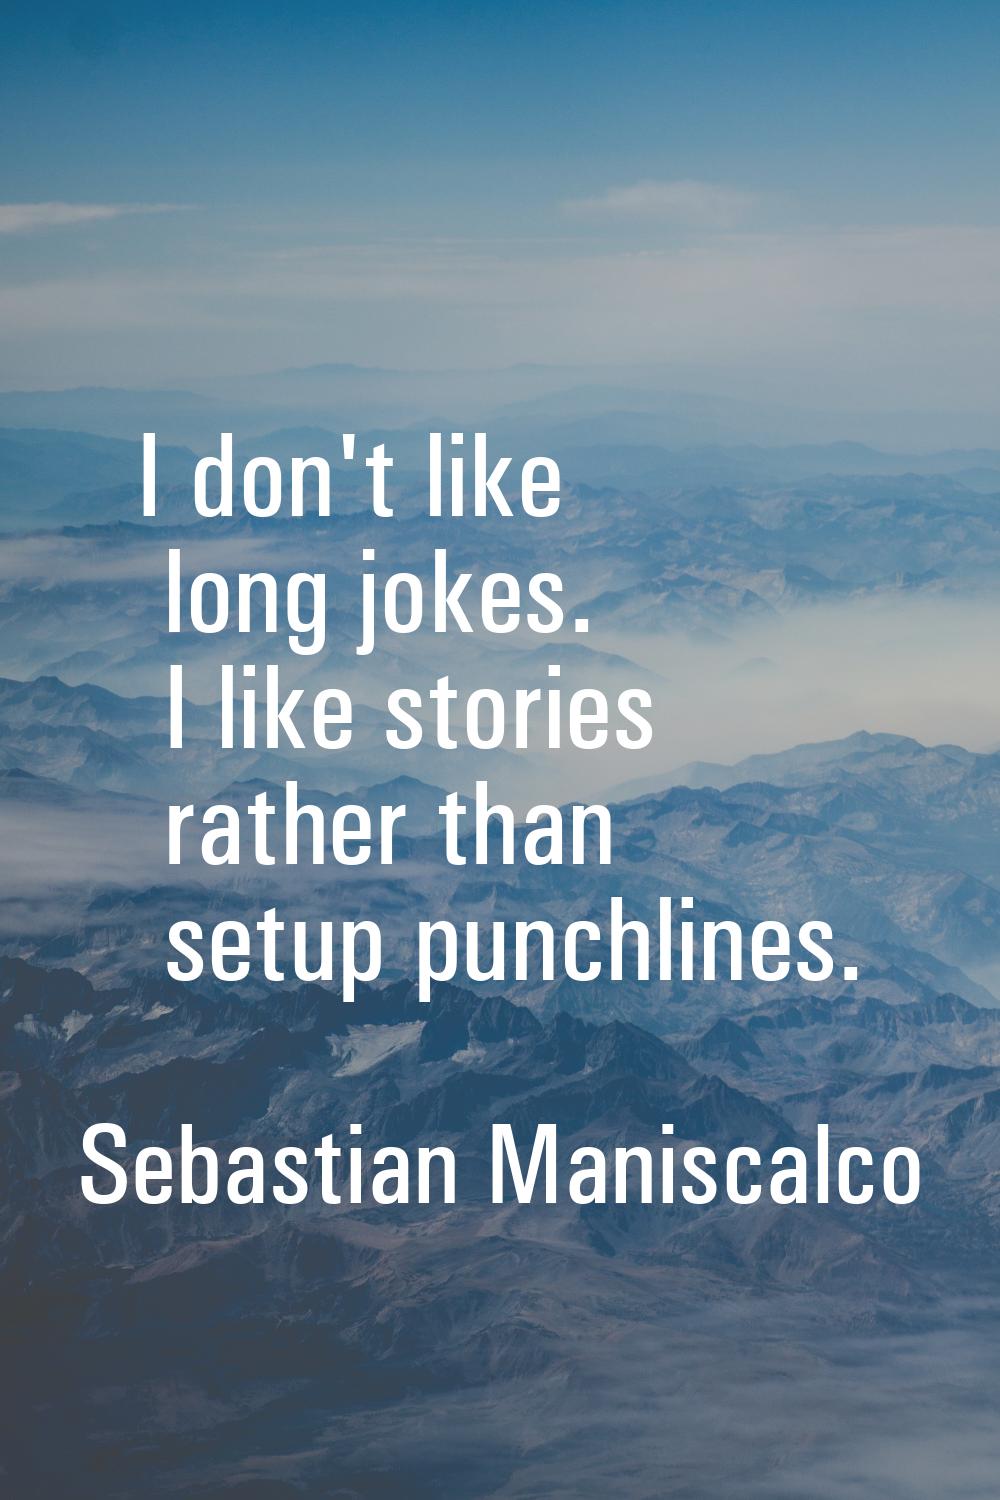 I don't like long jokes. I like stories rather than setup punchlines.